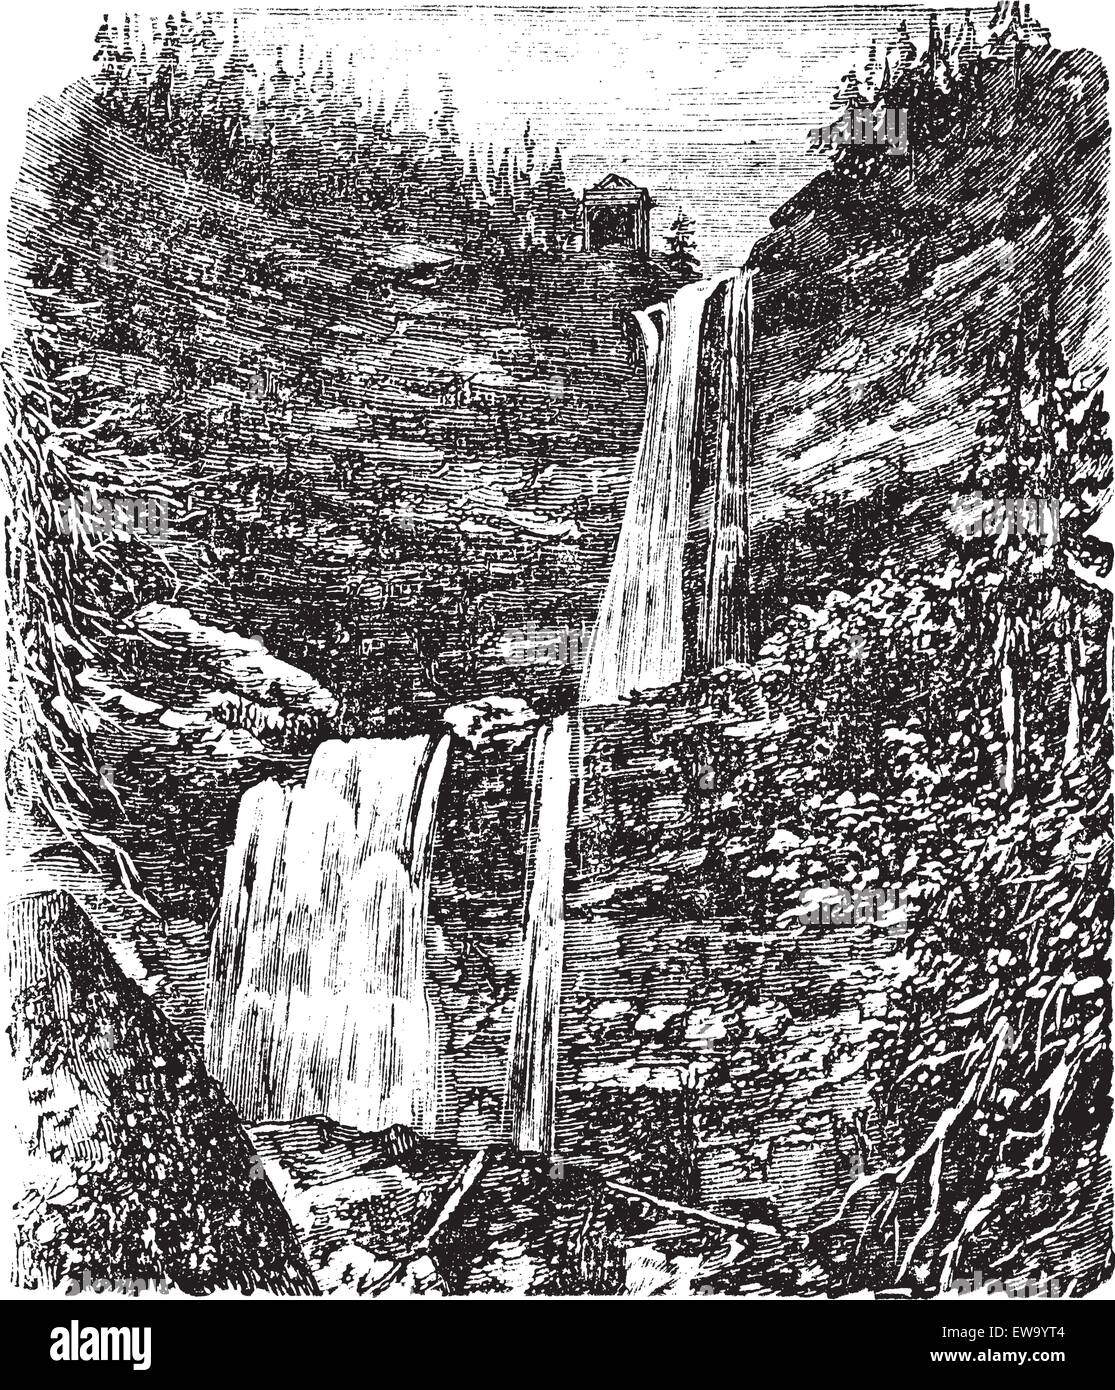 Catskill oder Kaaterskill Falls Vintage Gravur. Alten gravierte Darstellung der schönen Catskill Wasserfälle. Stock Vektor